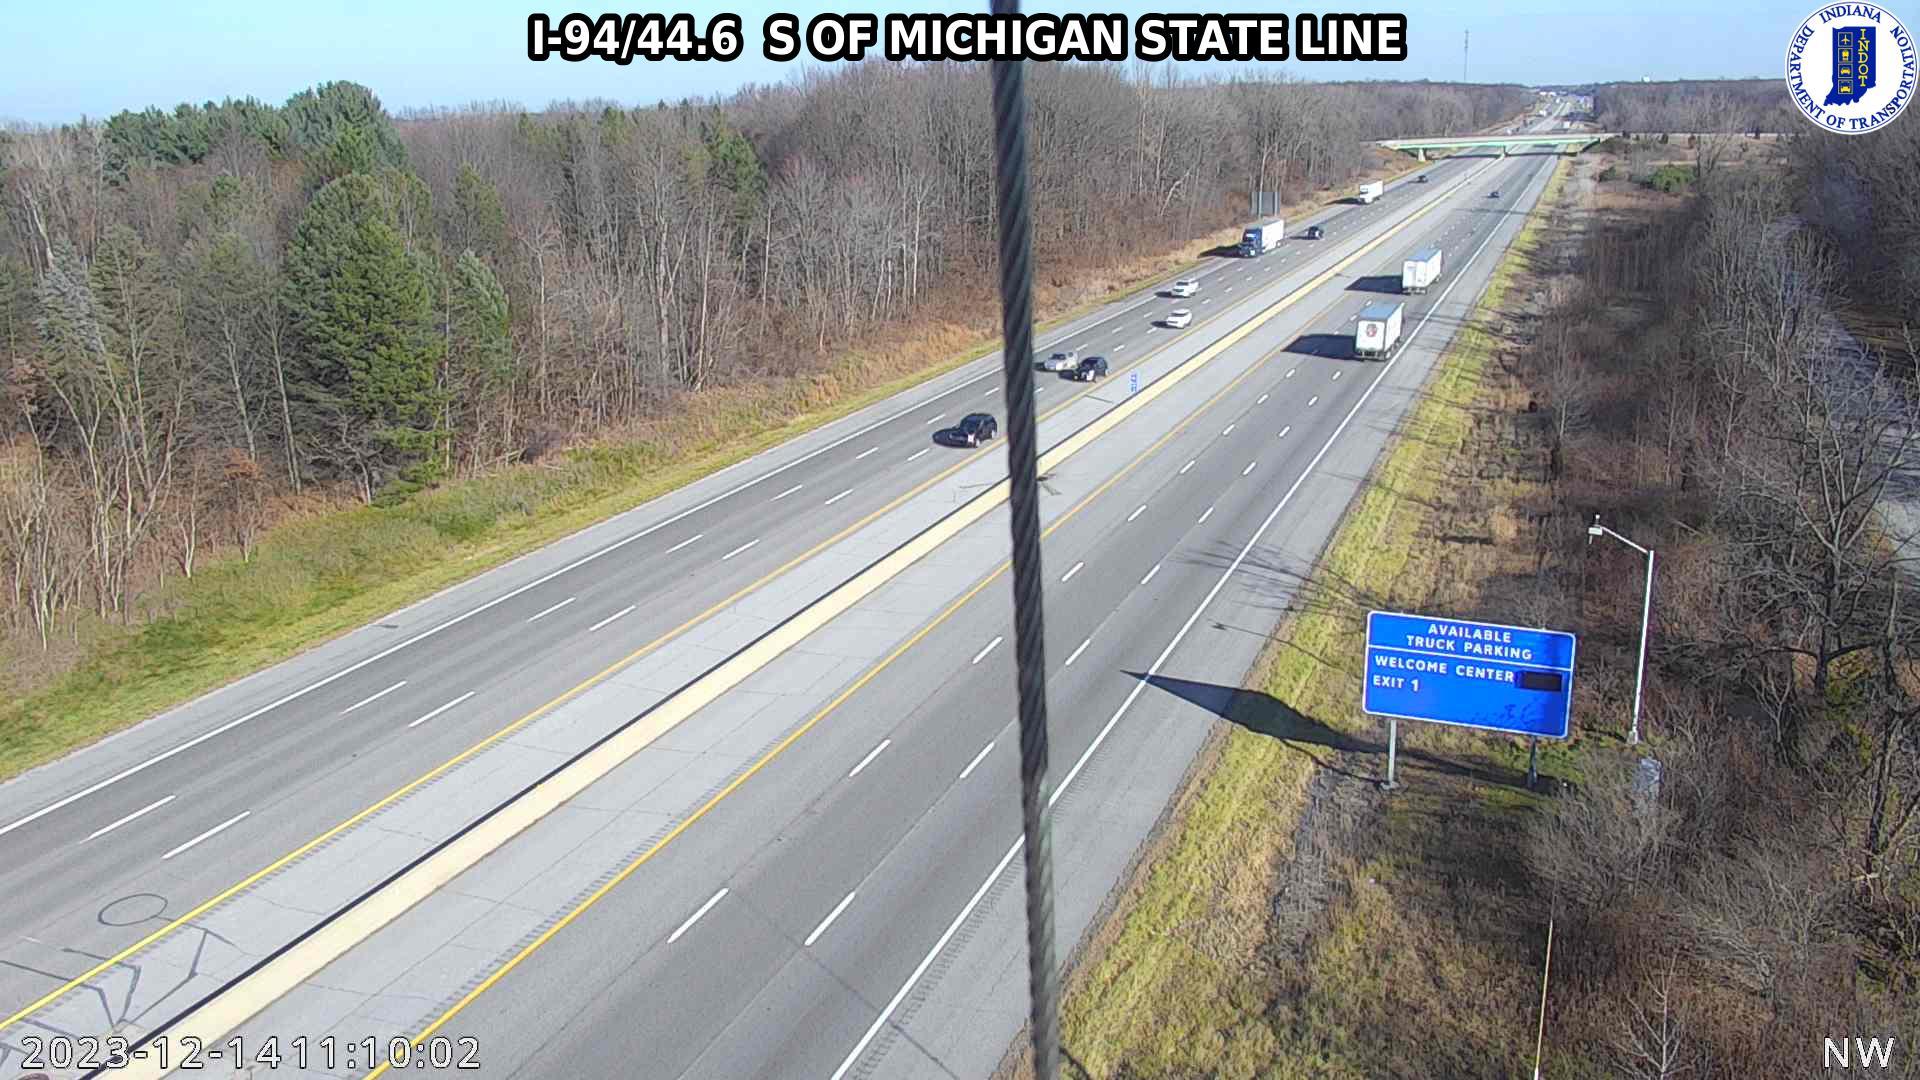 Traffic Cam Andry: I-94: I-94/44.6 S OF MICHIGAN STATE LINE: I-94/44.6 S OF MICHIGAN STATE LINE Player